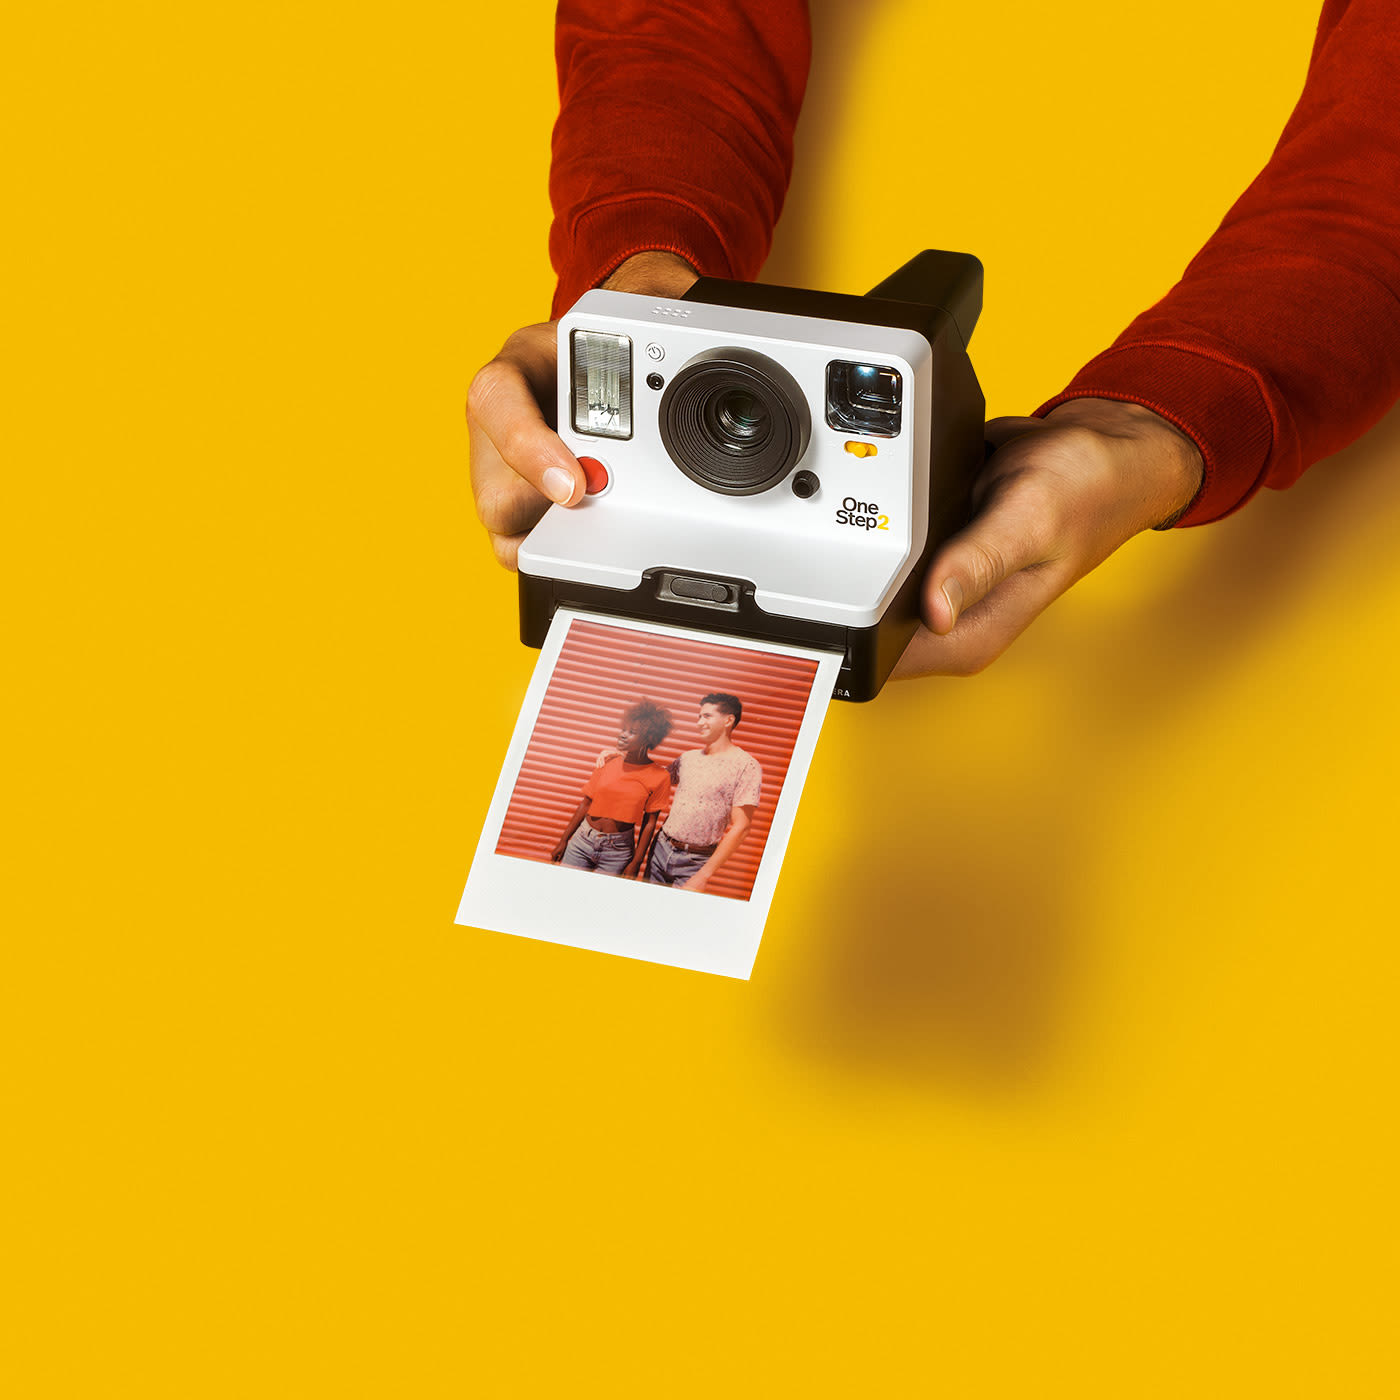 Story of a brand: Polaroid